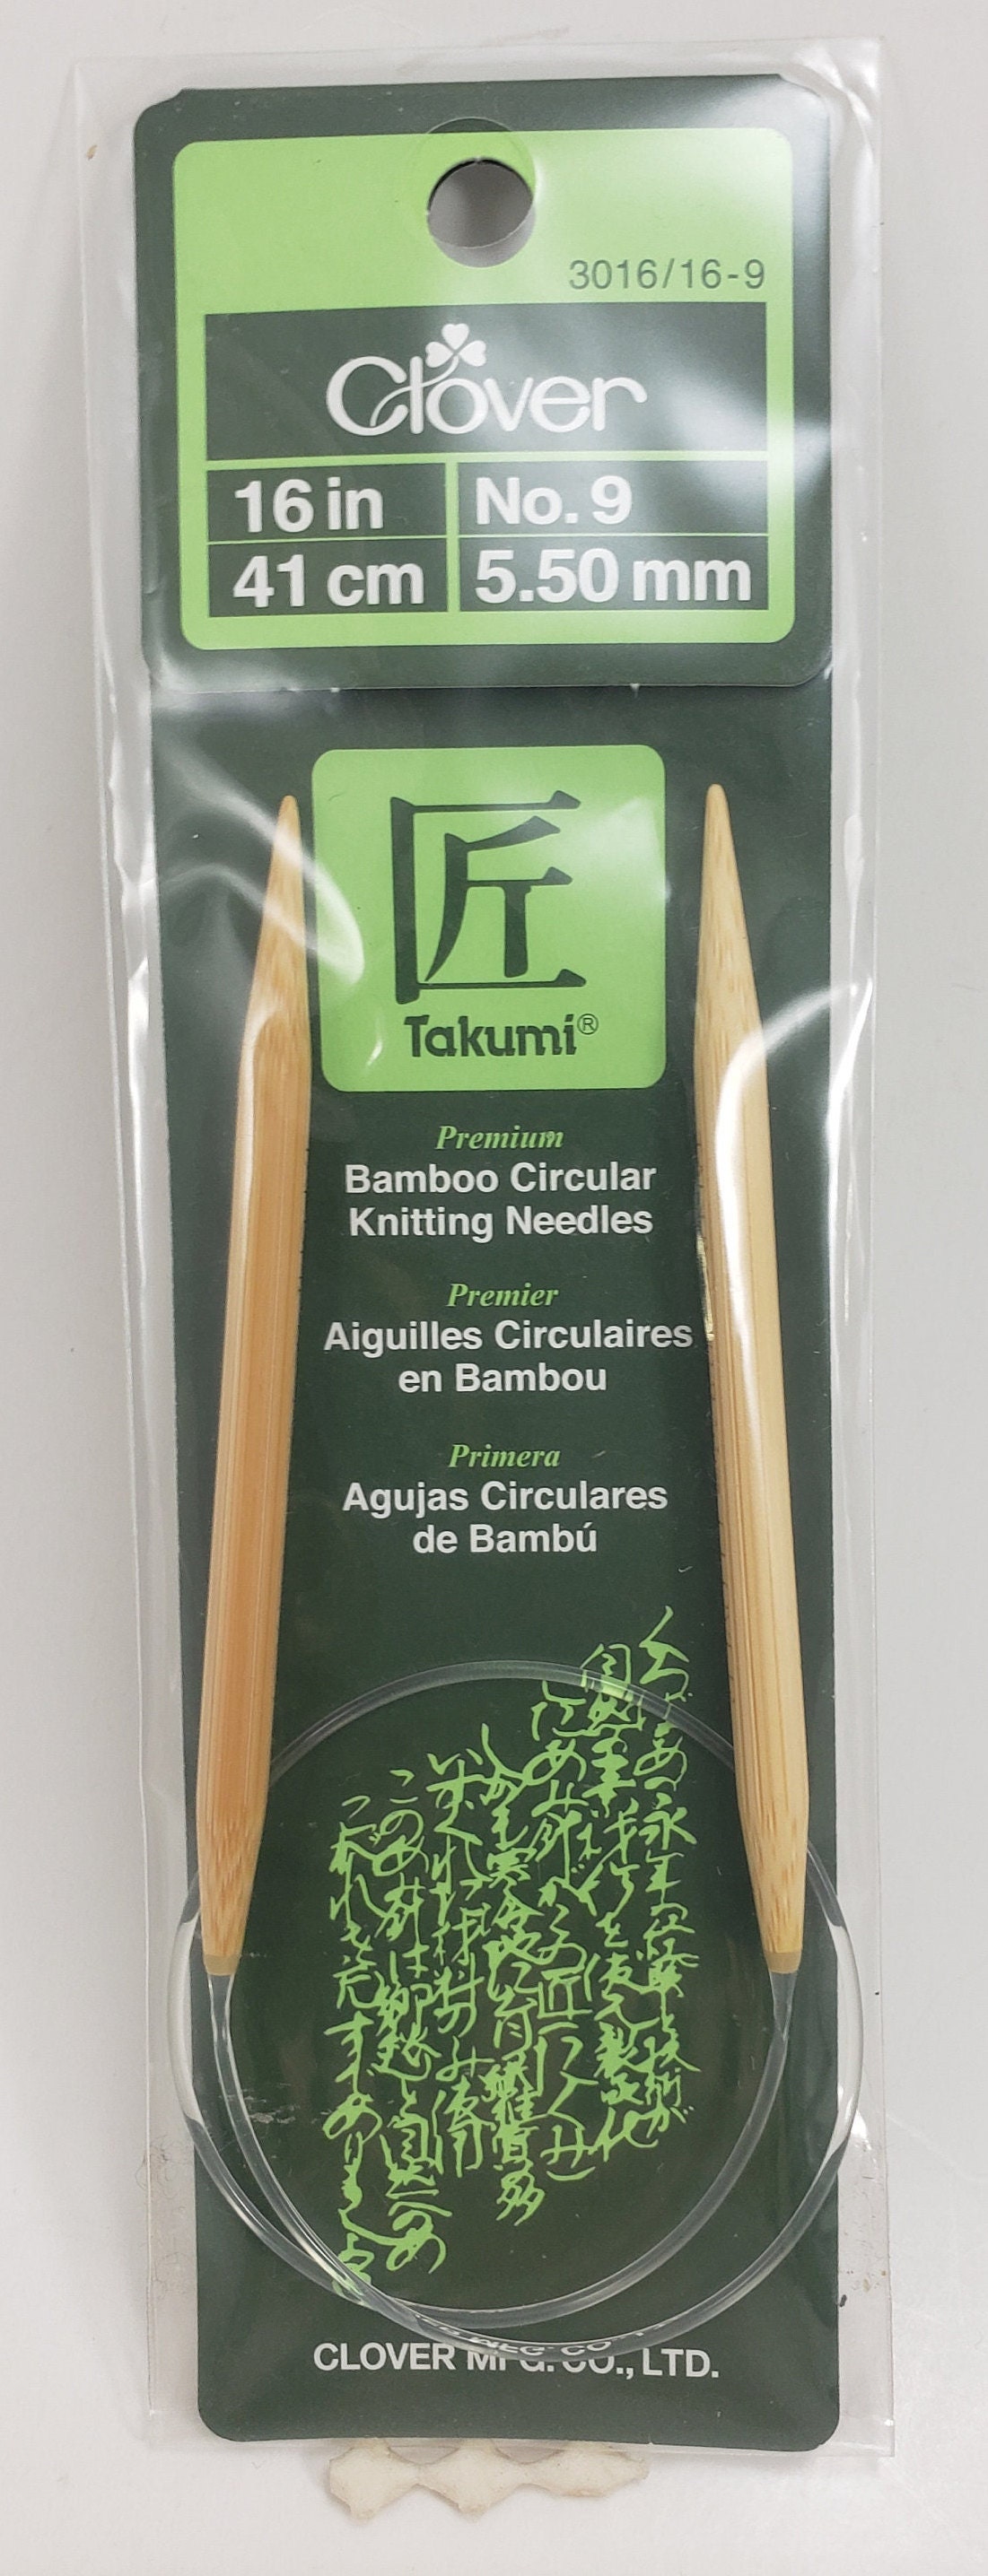 Size 15 Clover Bamboo Knitting Needles 16 Inch Circular Takumi Premium 10mm  41cm for sale online